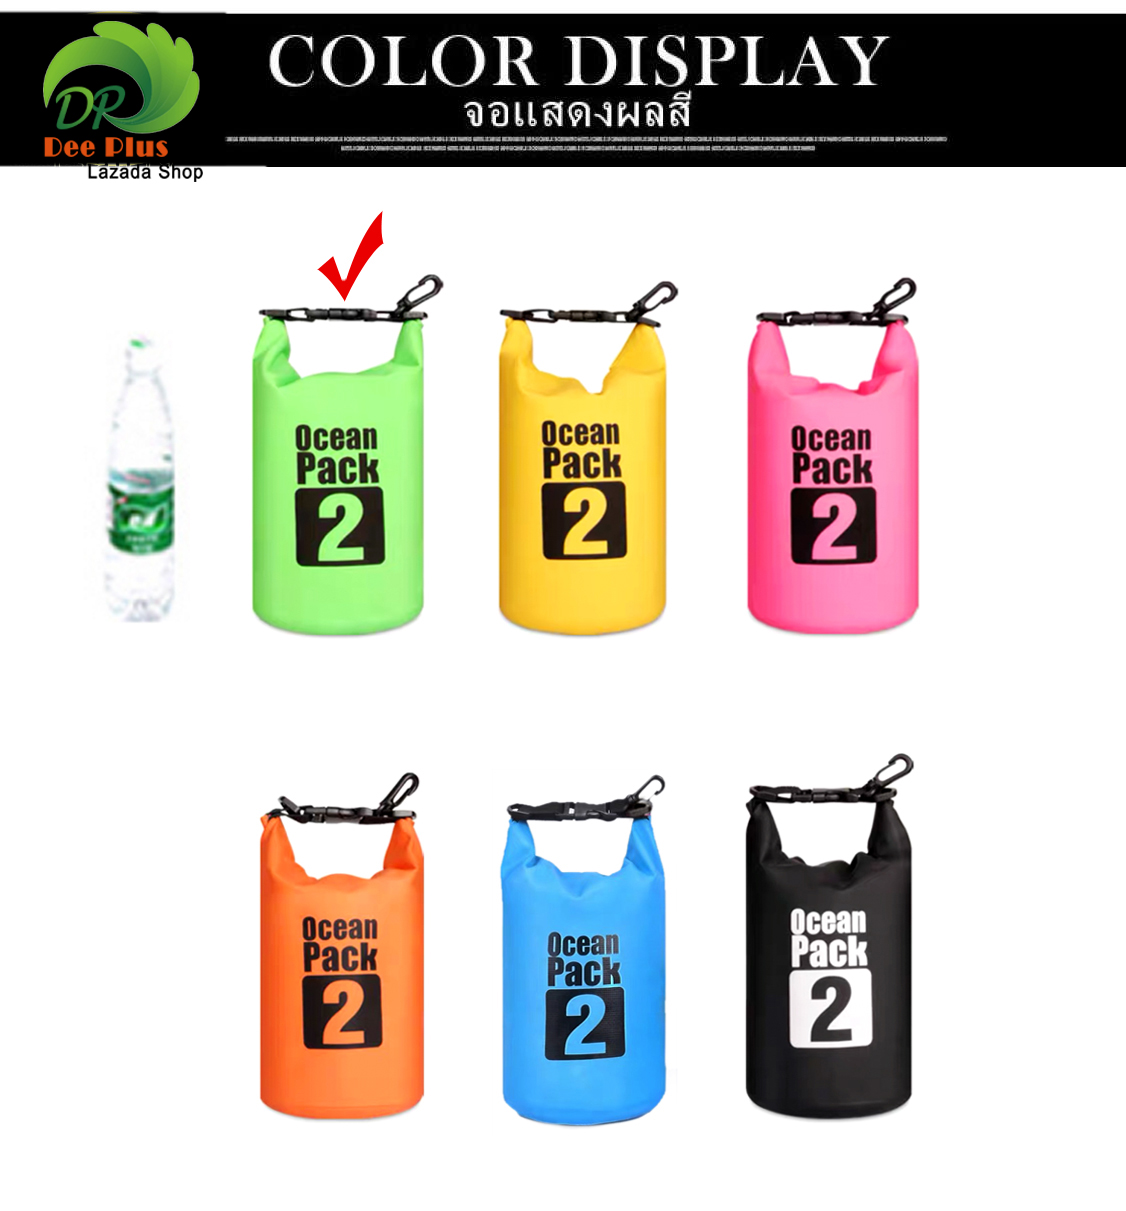 Ocean Pack 2L 6colors กระเป๋ากันน้ำขนาด2ลิตร มี6สีให้เลือก Ocean Pack 2L 6colors  2 liters waterproof bag (with 6 colors for choosing)